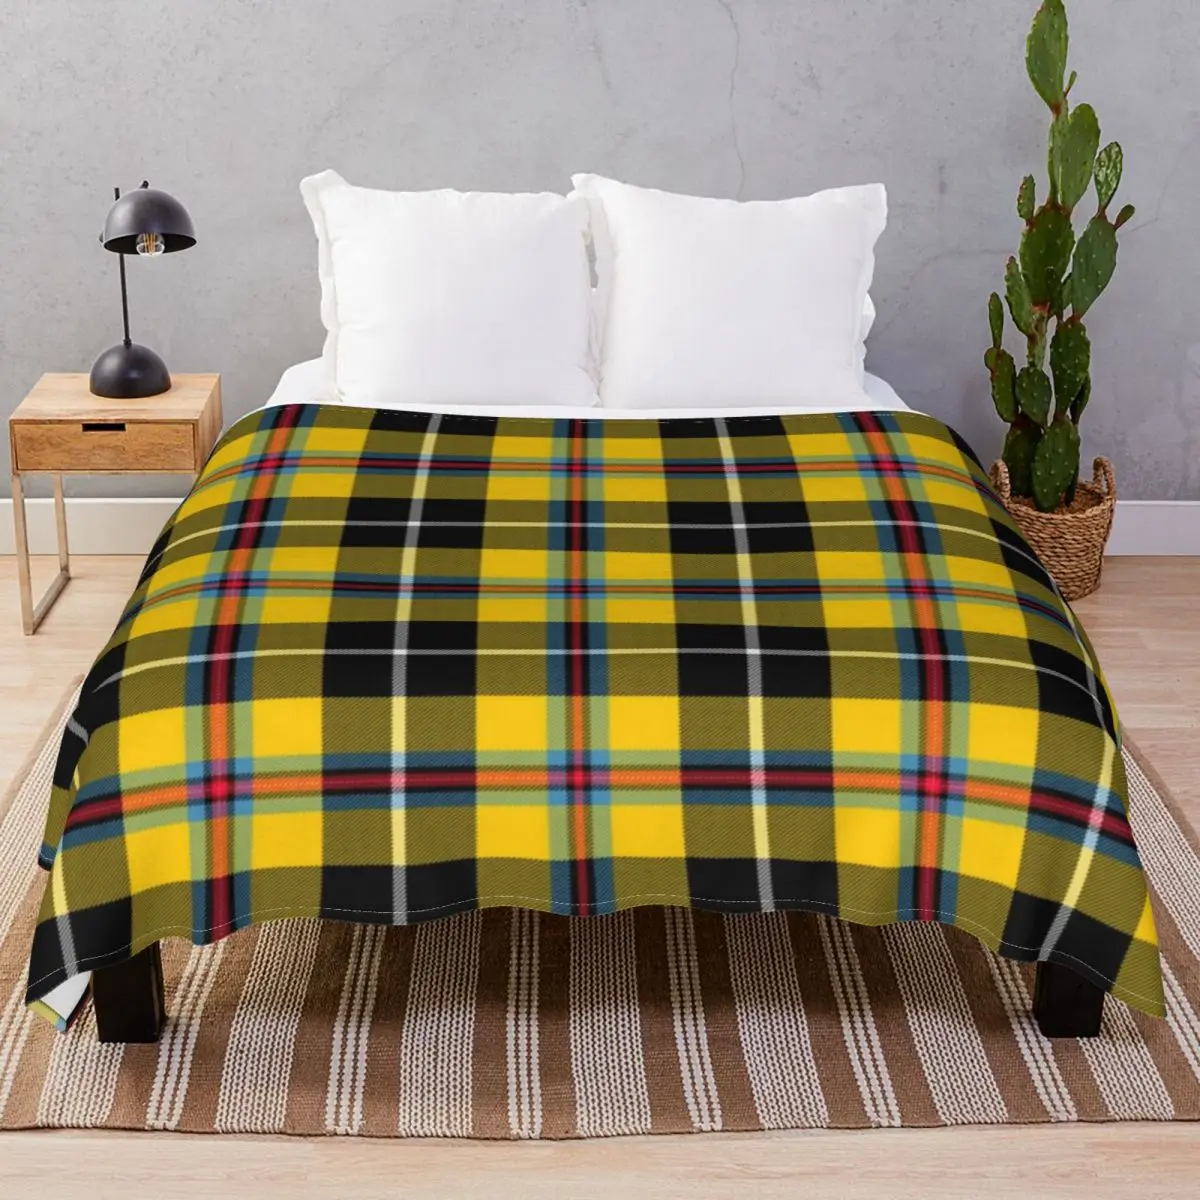 Cornish Tartan Blanket Fleece Textile Decor Super Soft Throw Blankets for Bed Sofa Travel Office